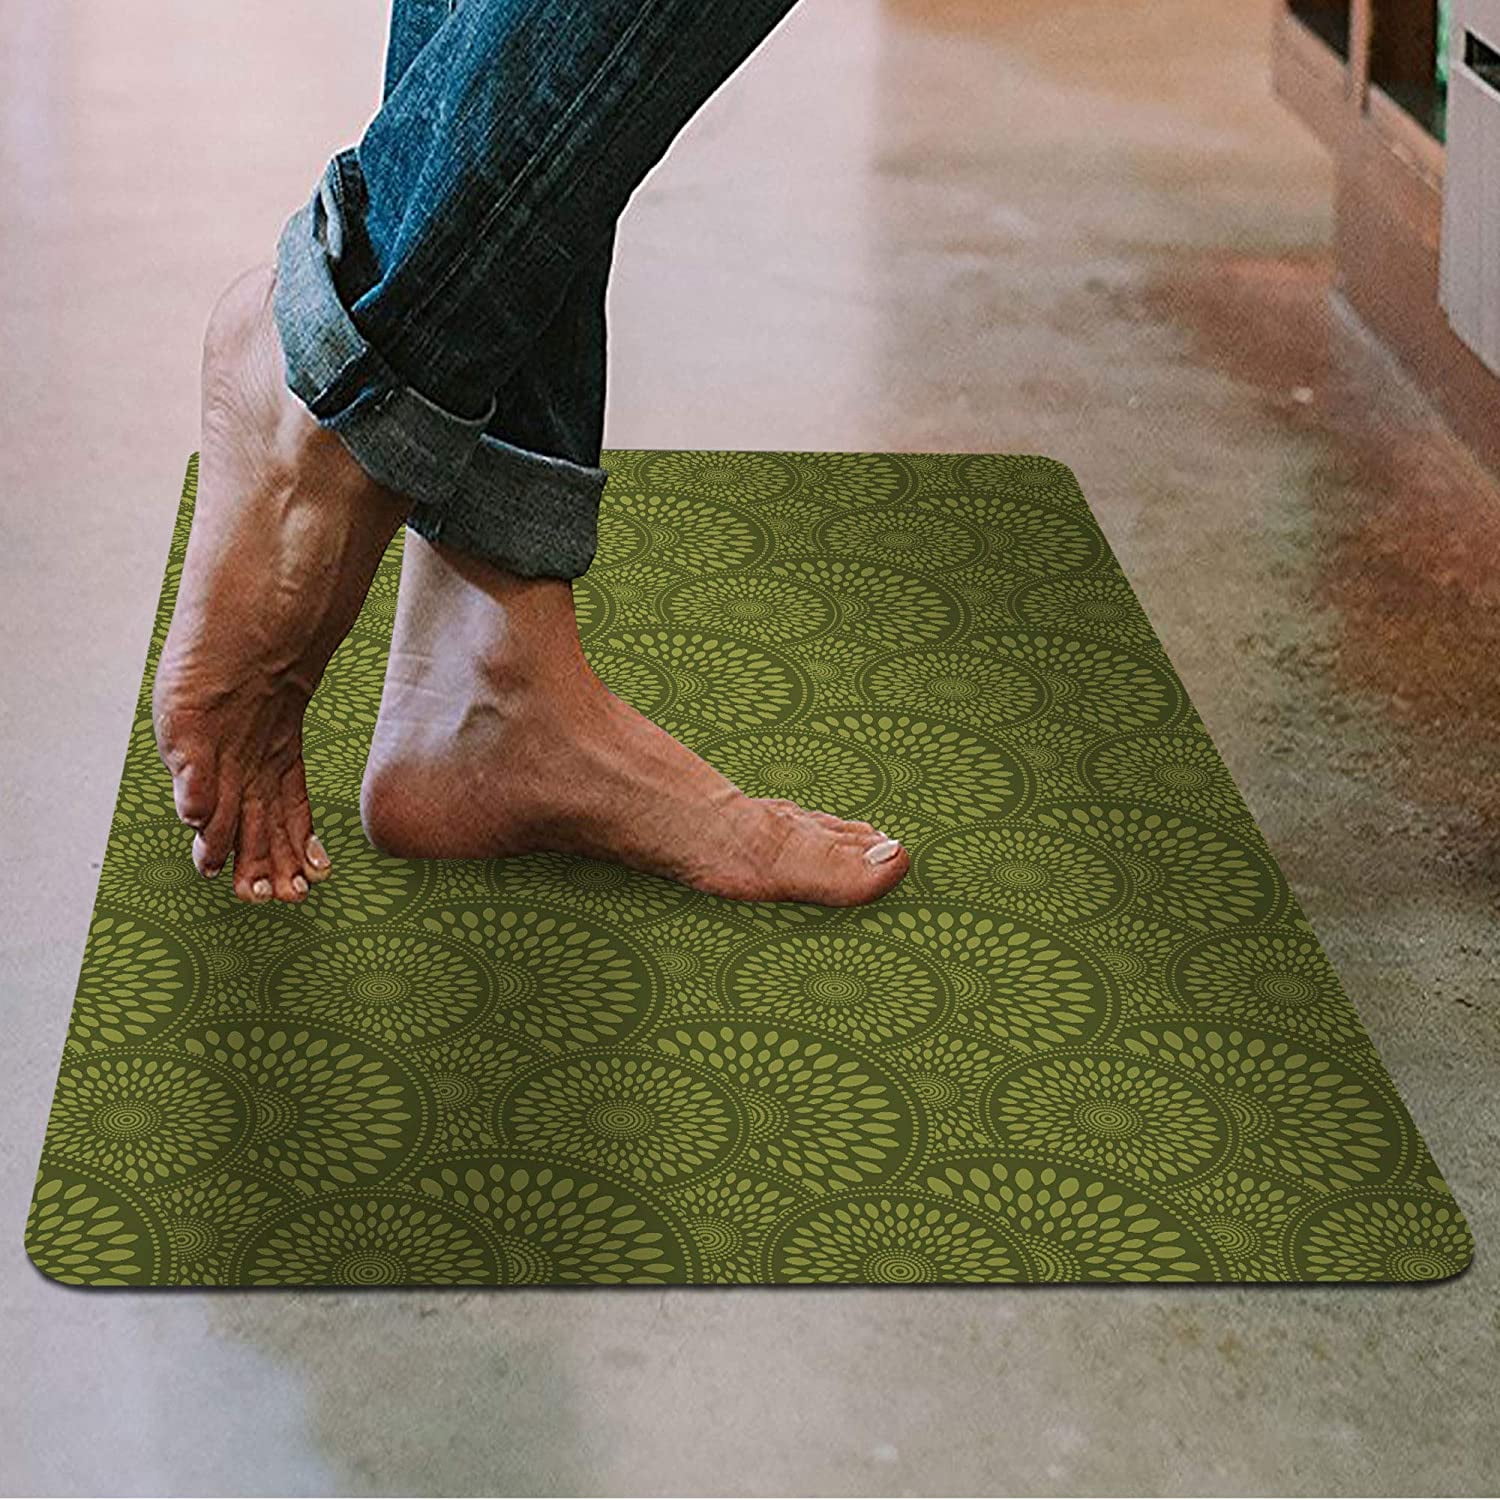 Green Grass Stylish Floor Carpet Area Rug Non-slip Doormat Room Entrance MatS 